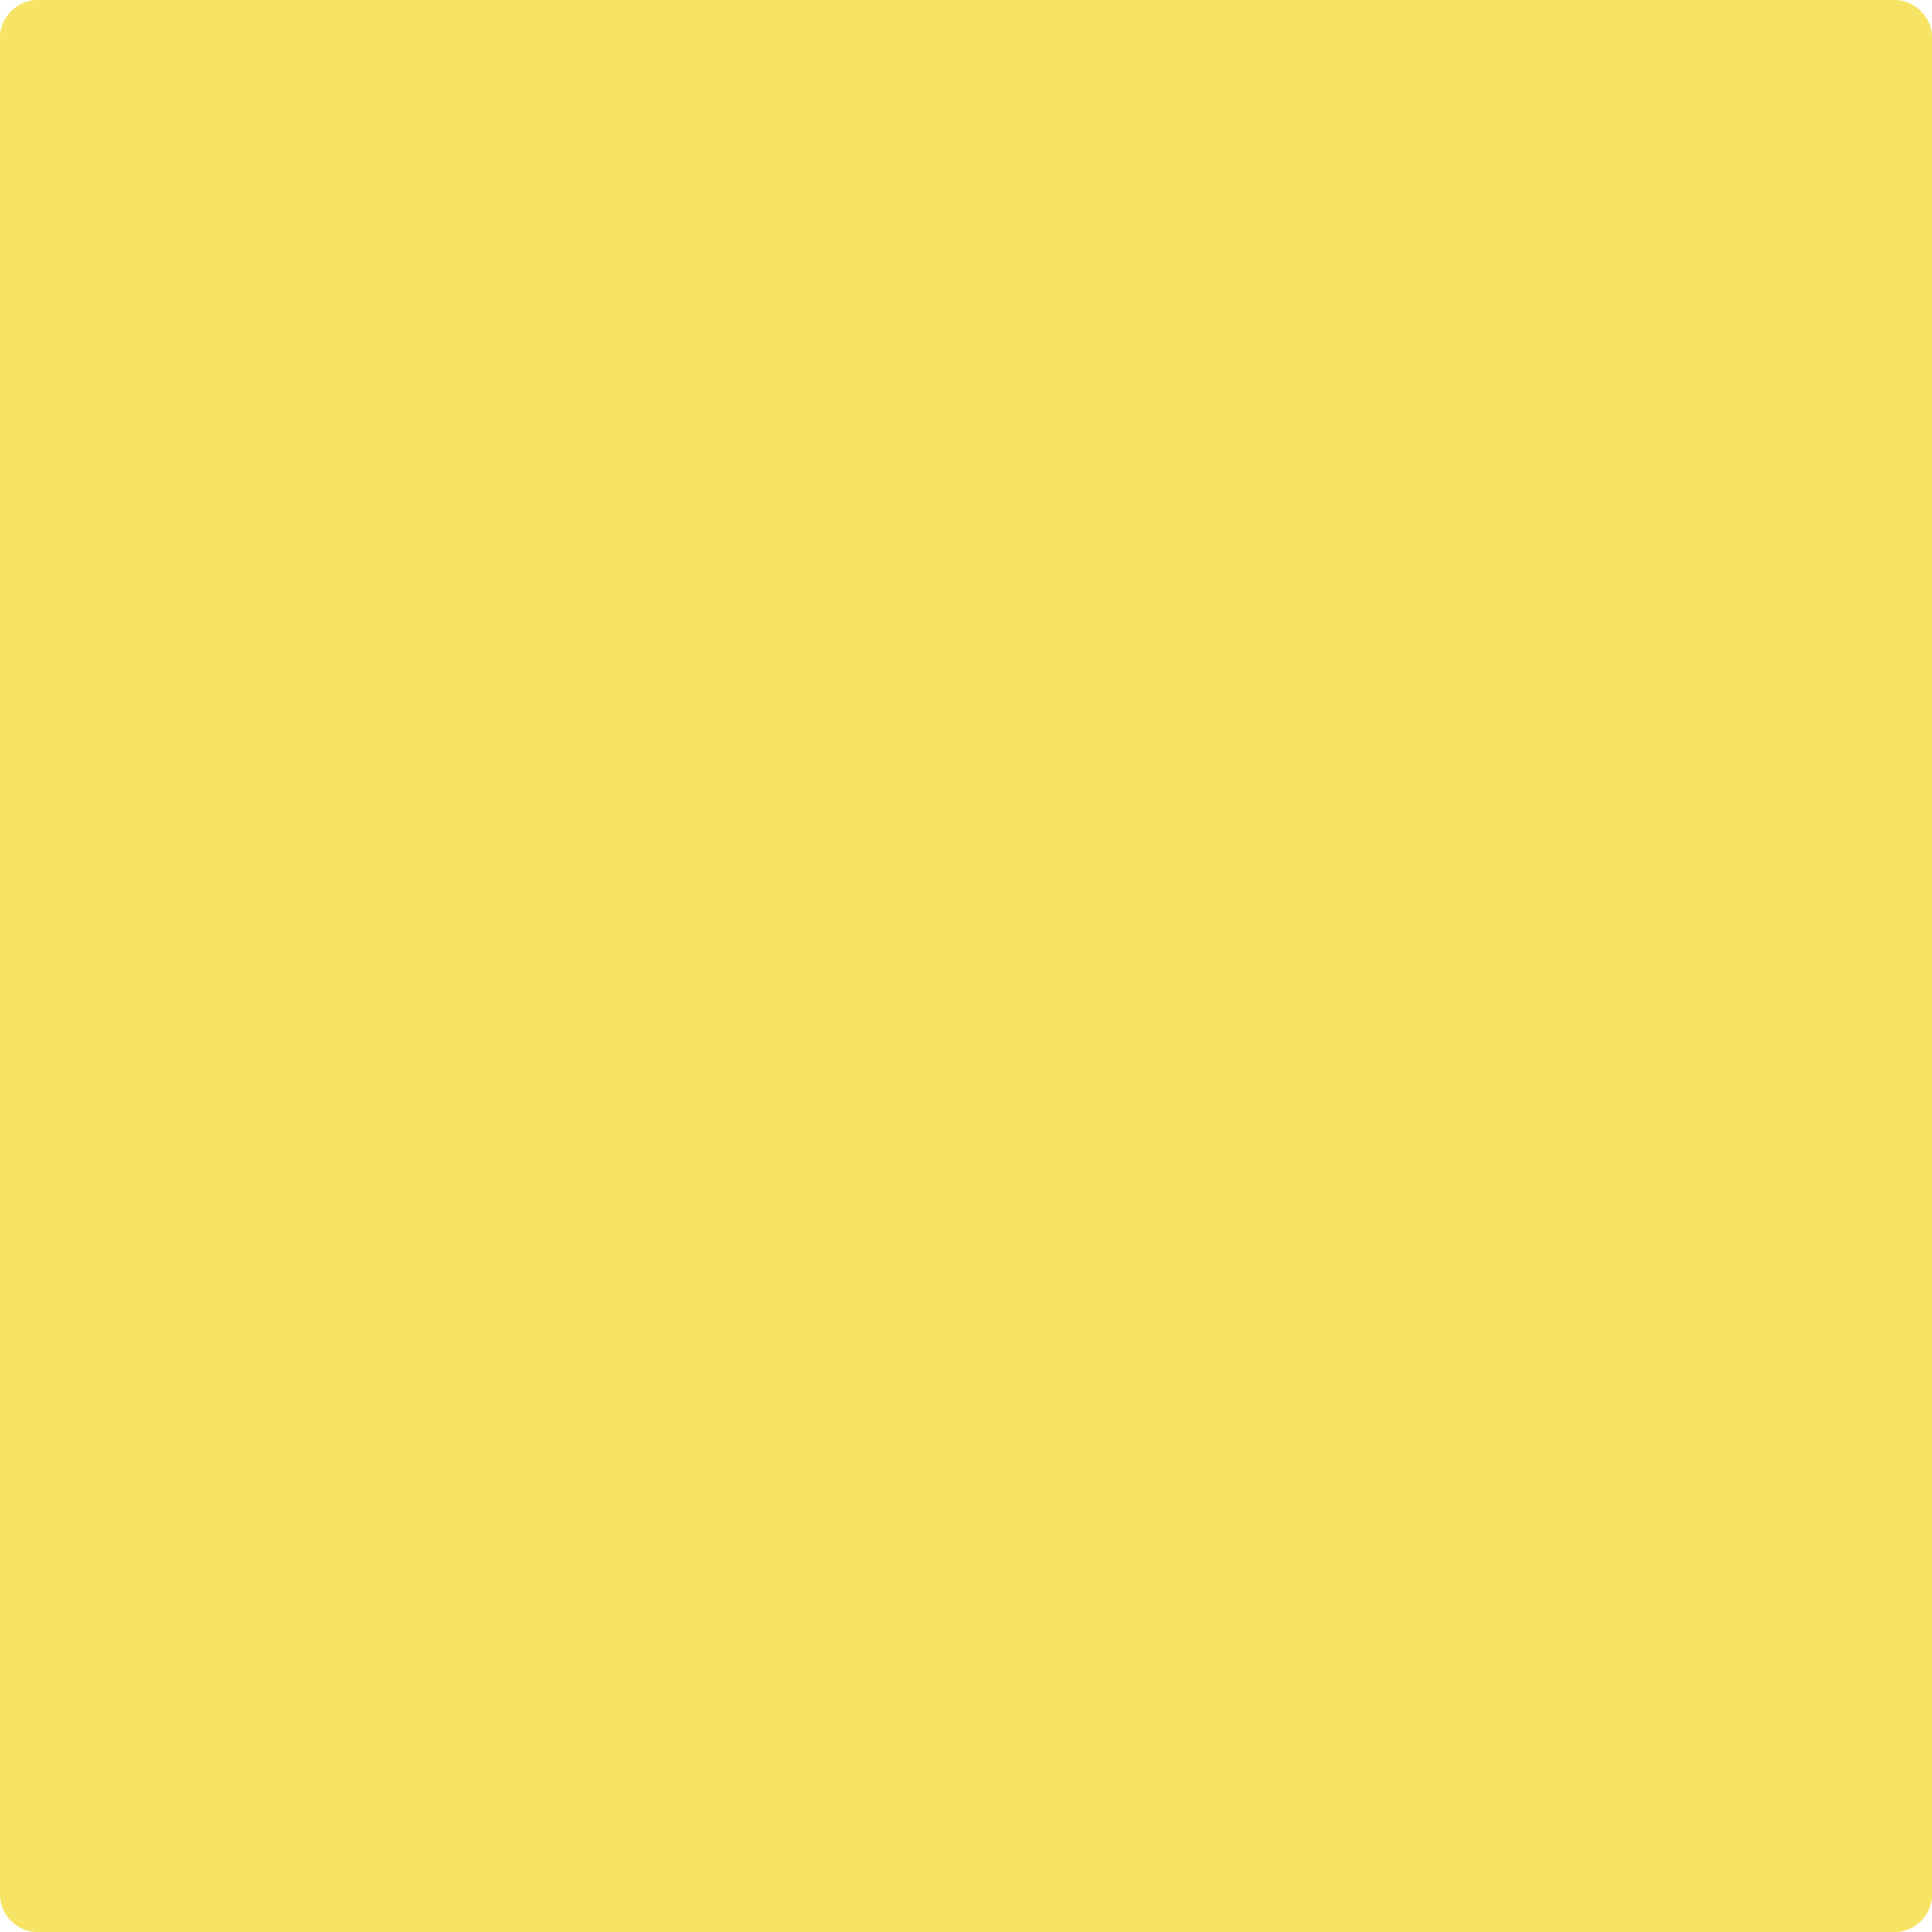 Shop Benajmin Moore's 335 Delightful Yellow at Aboff's in New York & Long Island. Long Island's favorite Benjamin Moore dealer.